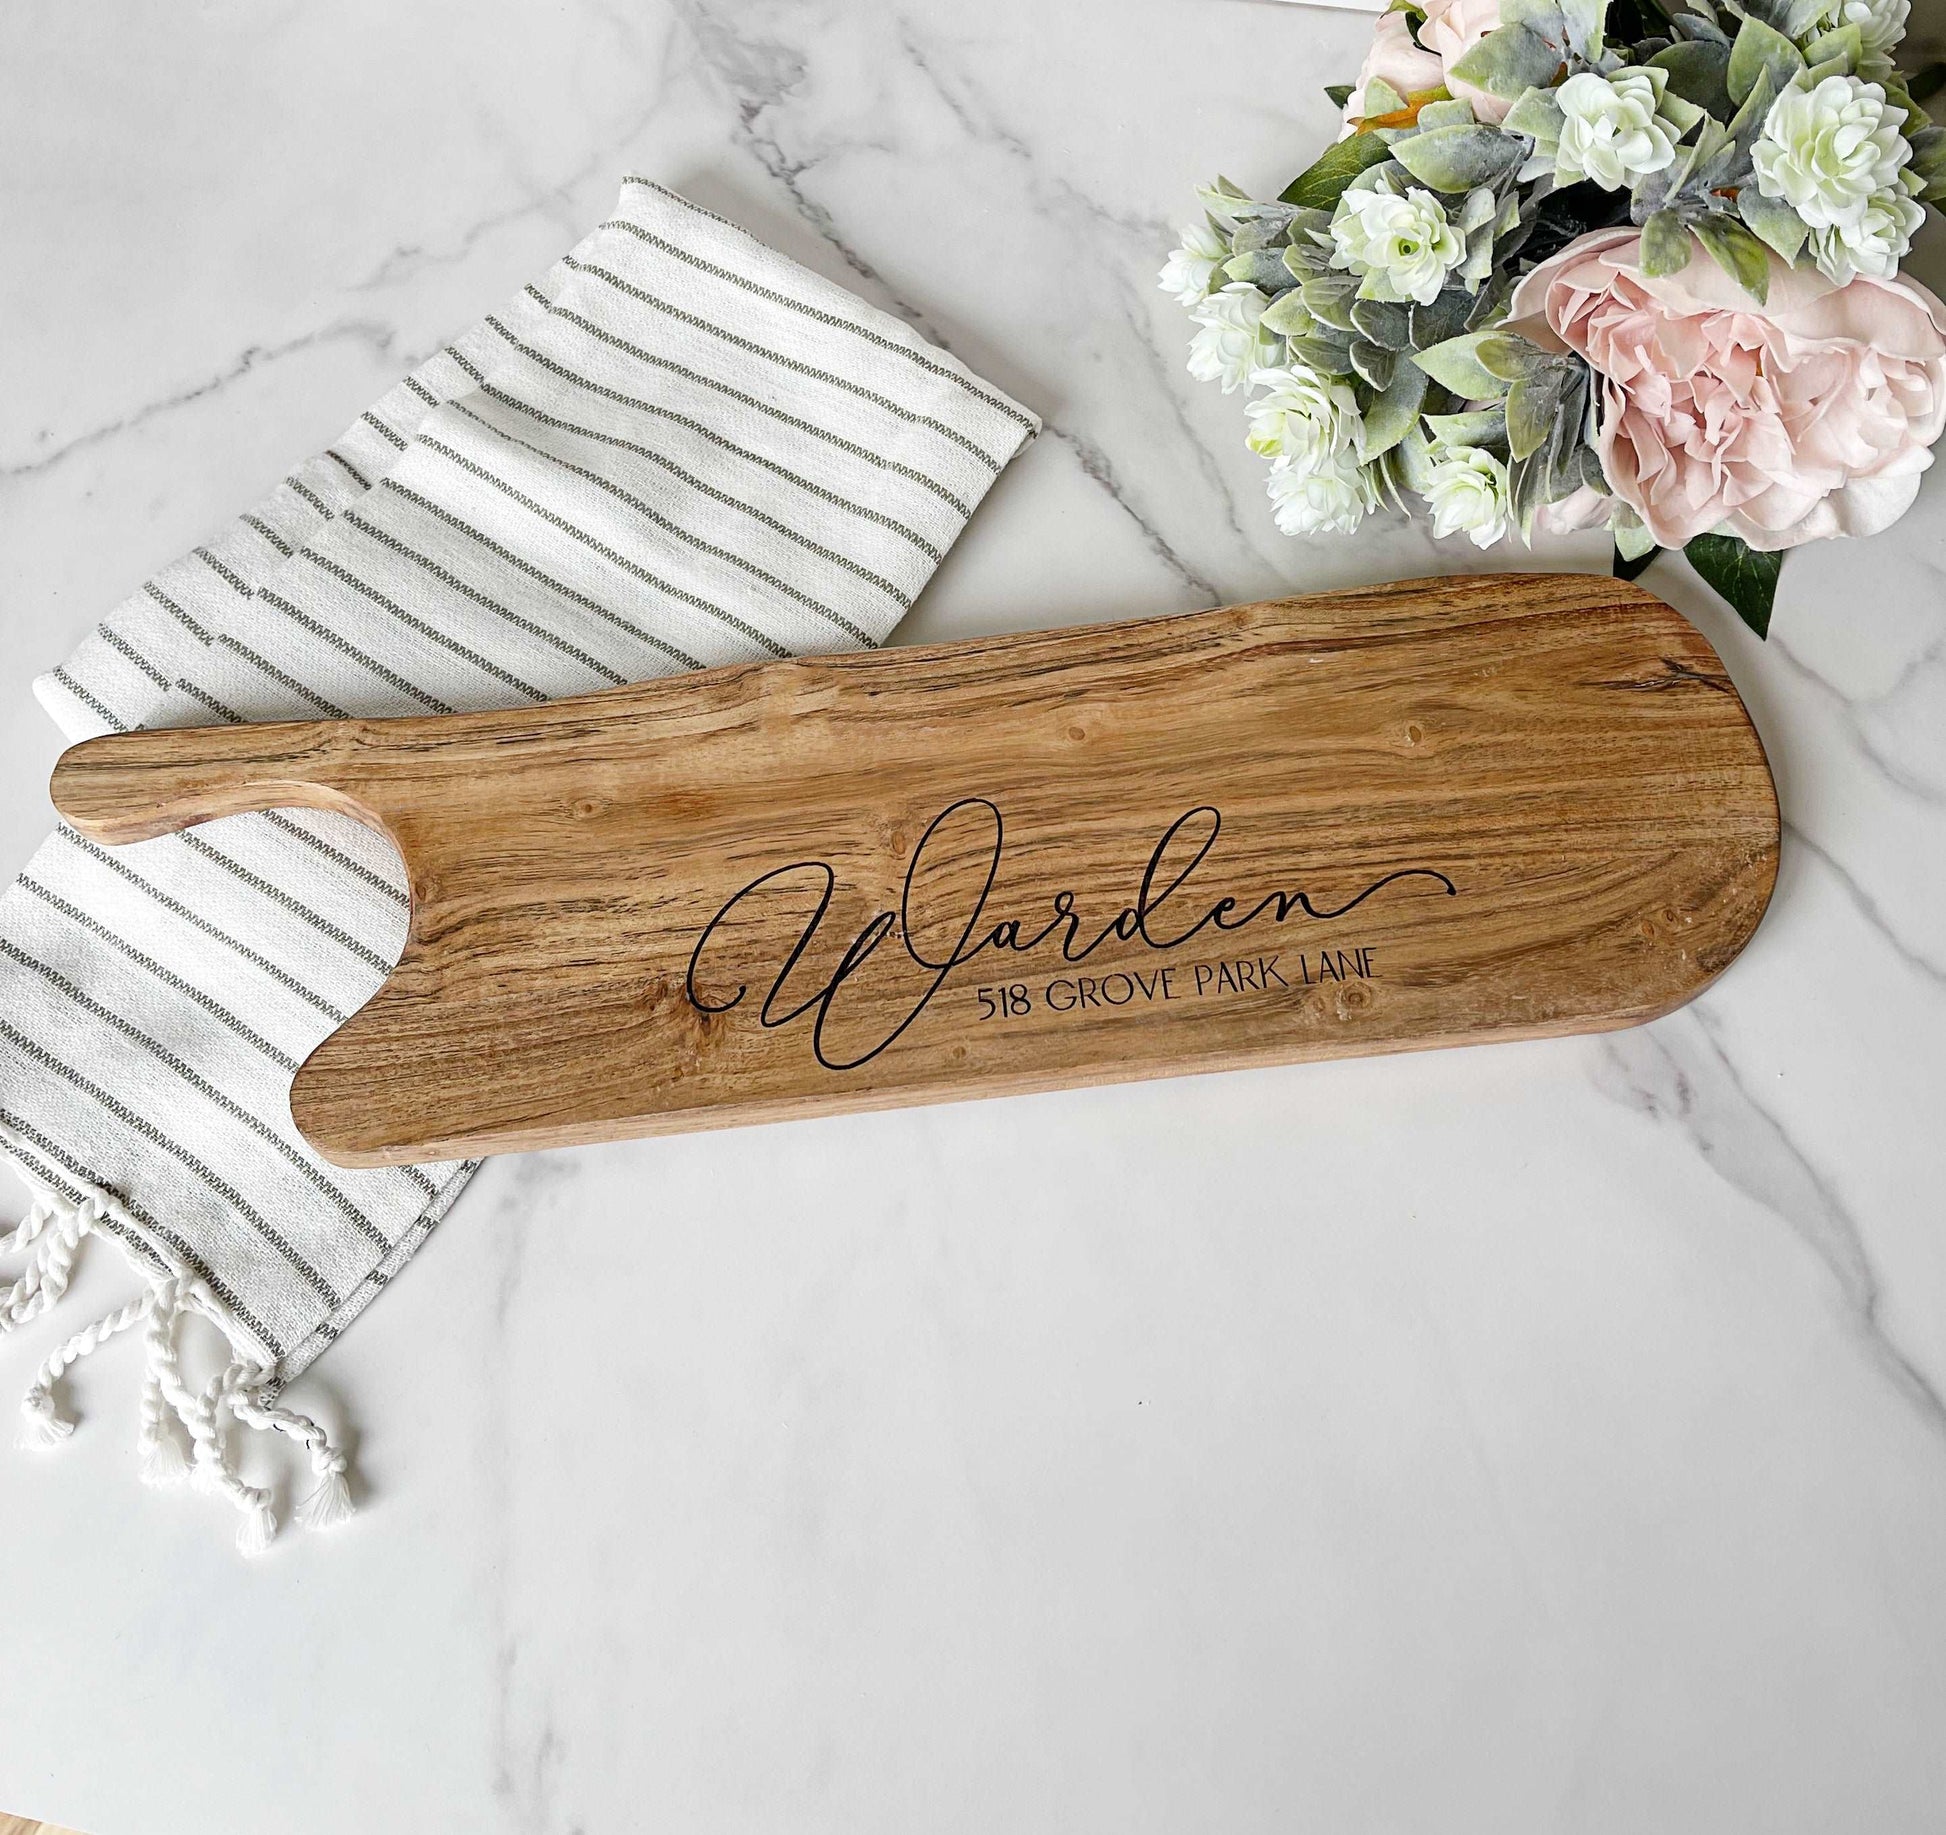 Custom engraved acacia wood cheese board with handle